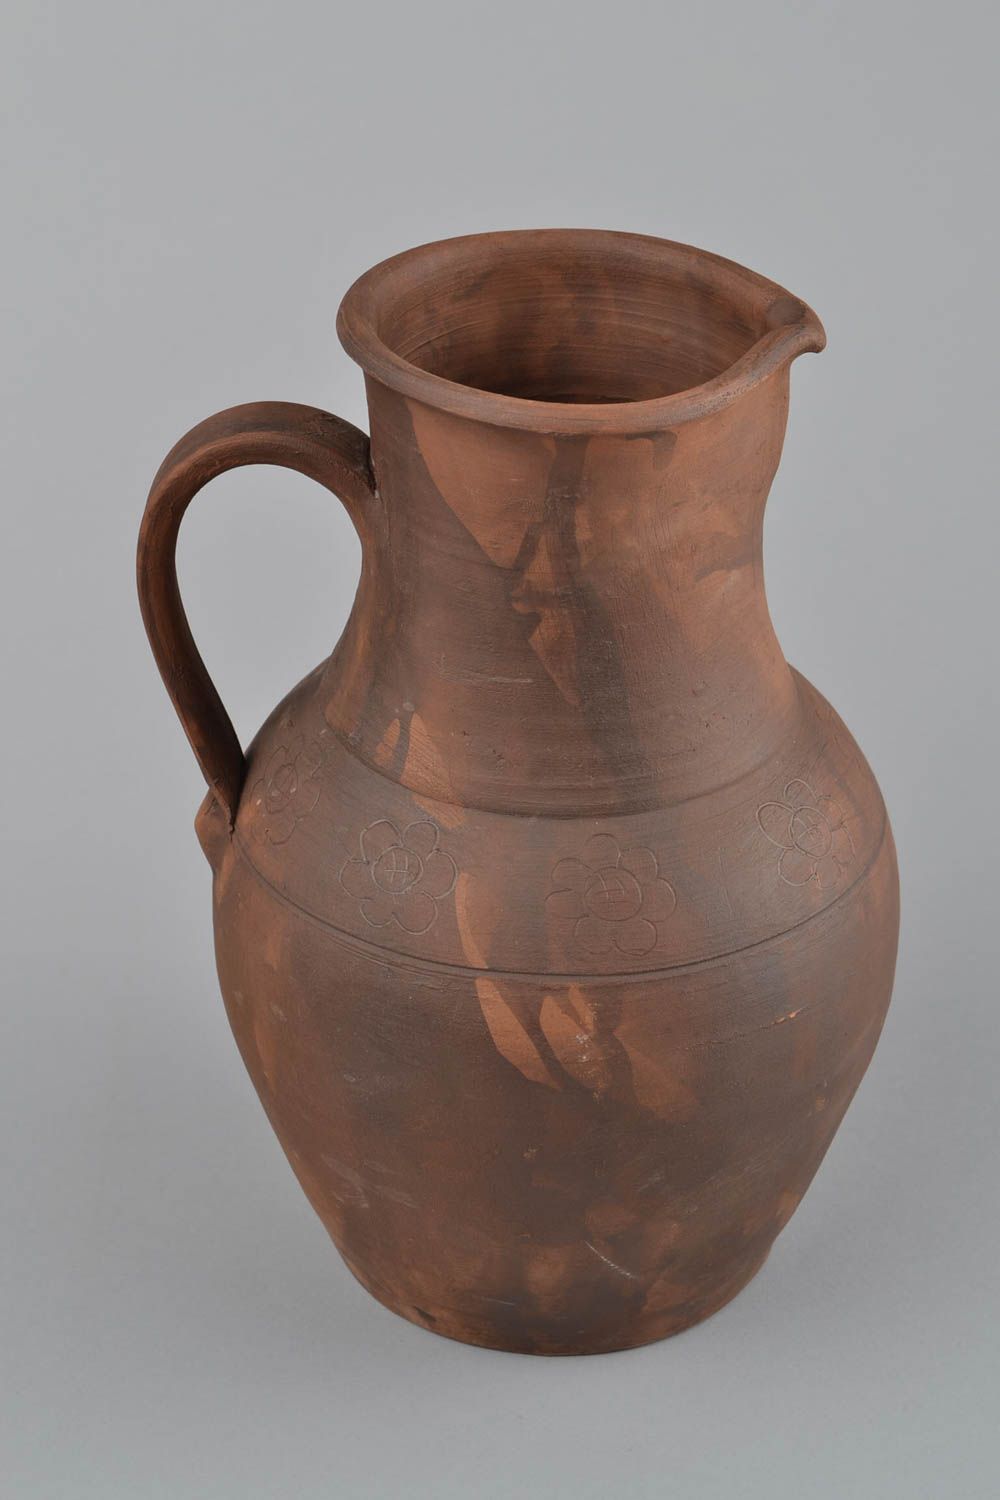 100 oz ceramic clay jug pitcher carafe in brown color 2,9 lb photo 5